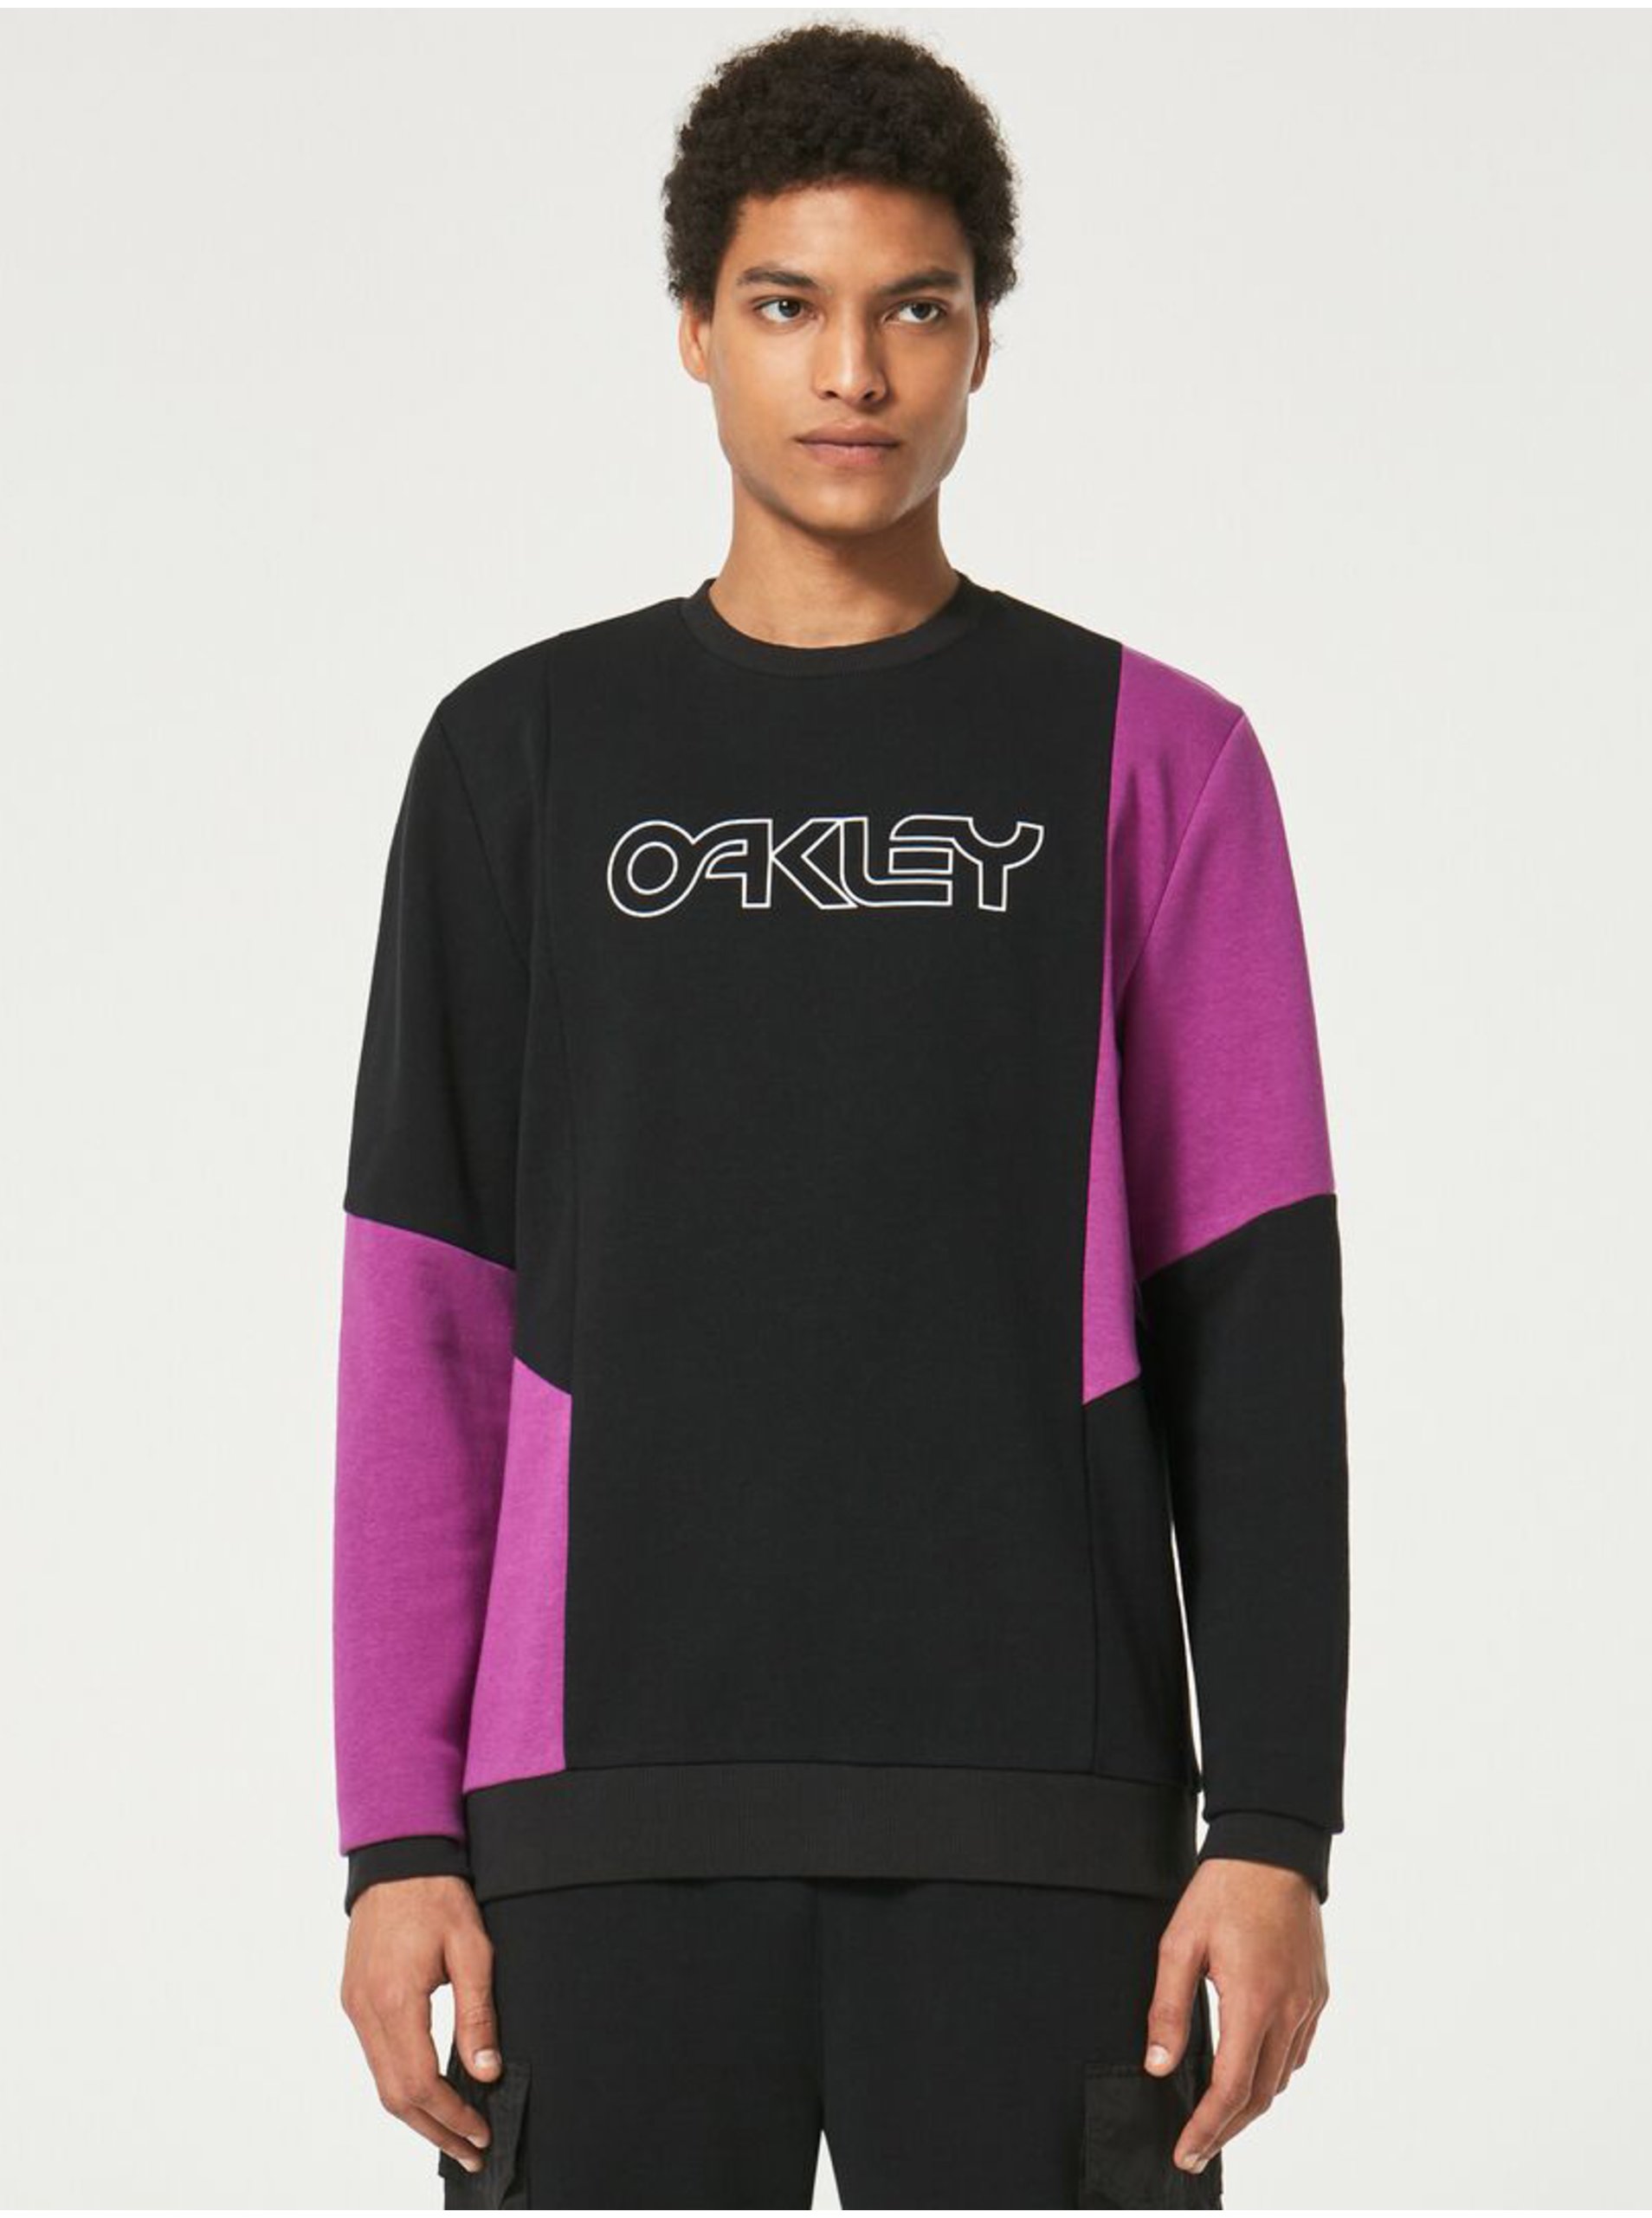 Purple and Black Mens Sweatshirt Oakley - Men